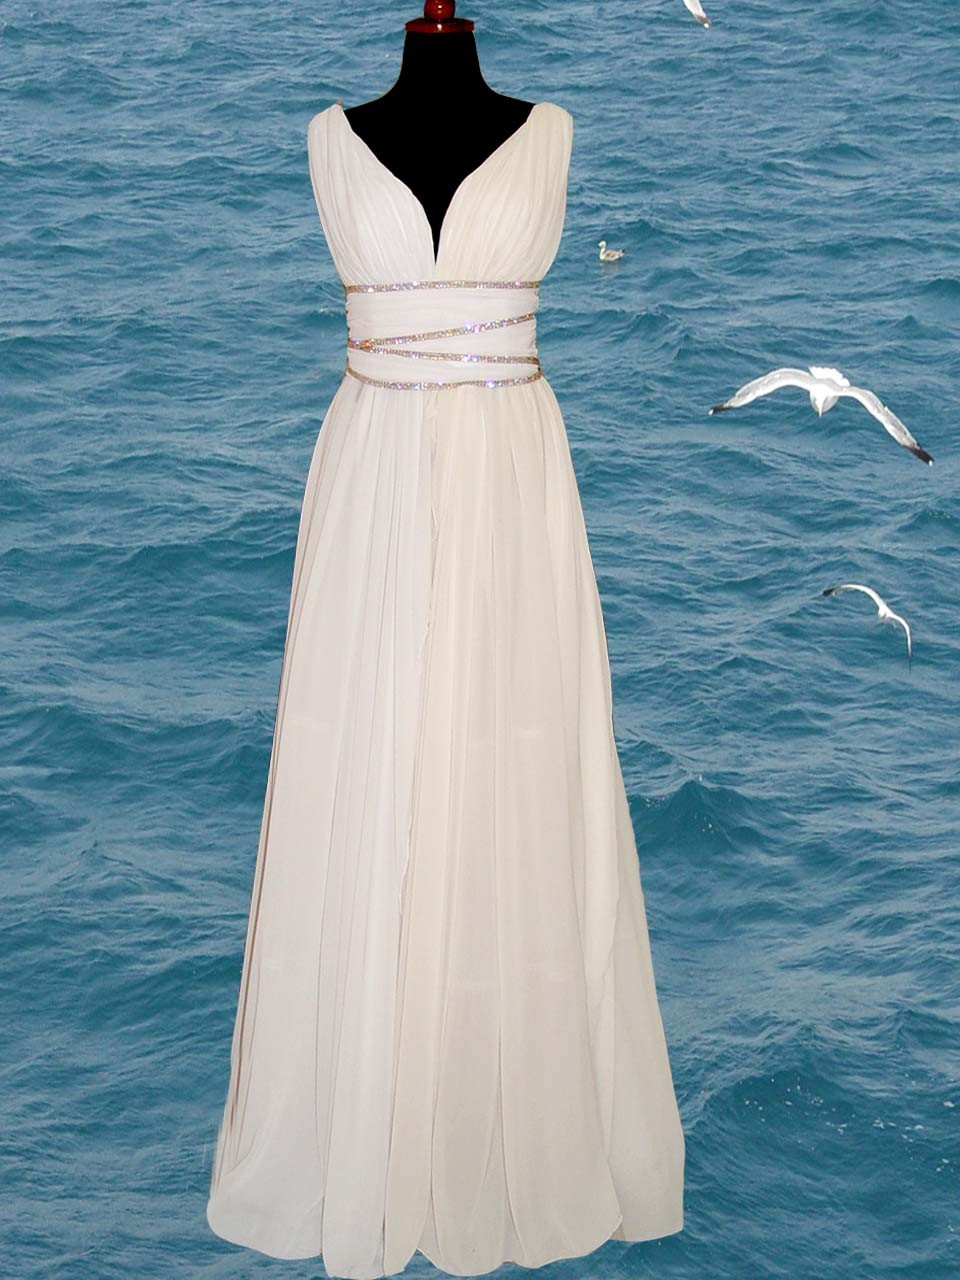 Greek wedding dresses for women